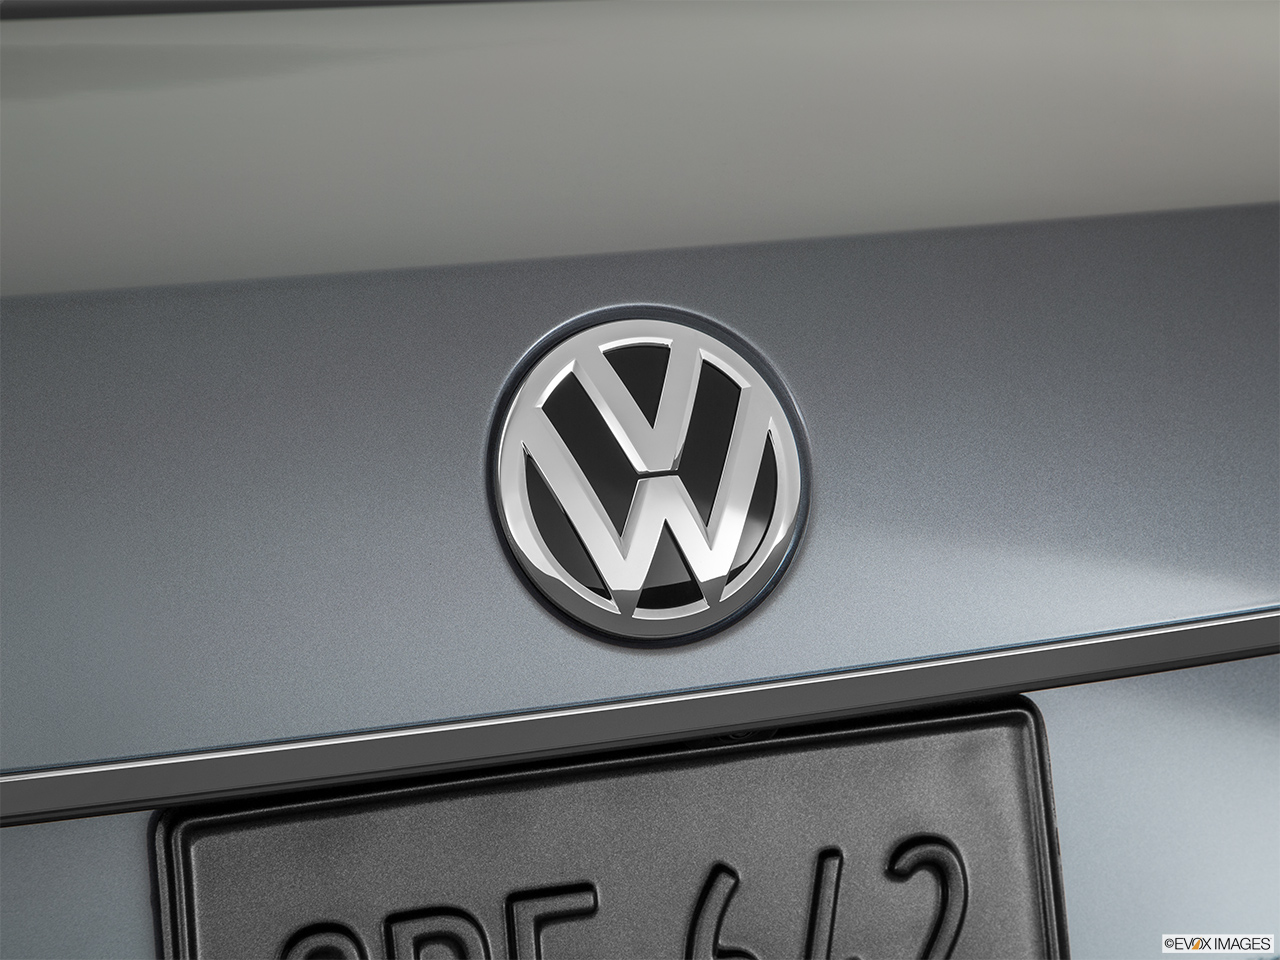 2018 Volkswagen Passat R-Line Rear manufacture badge/emblem 